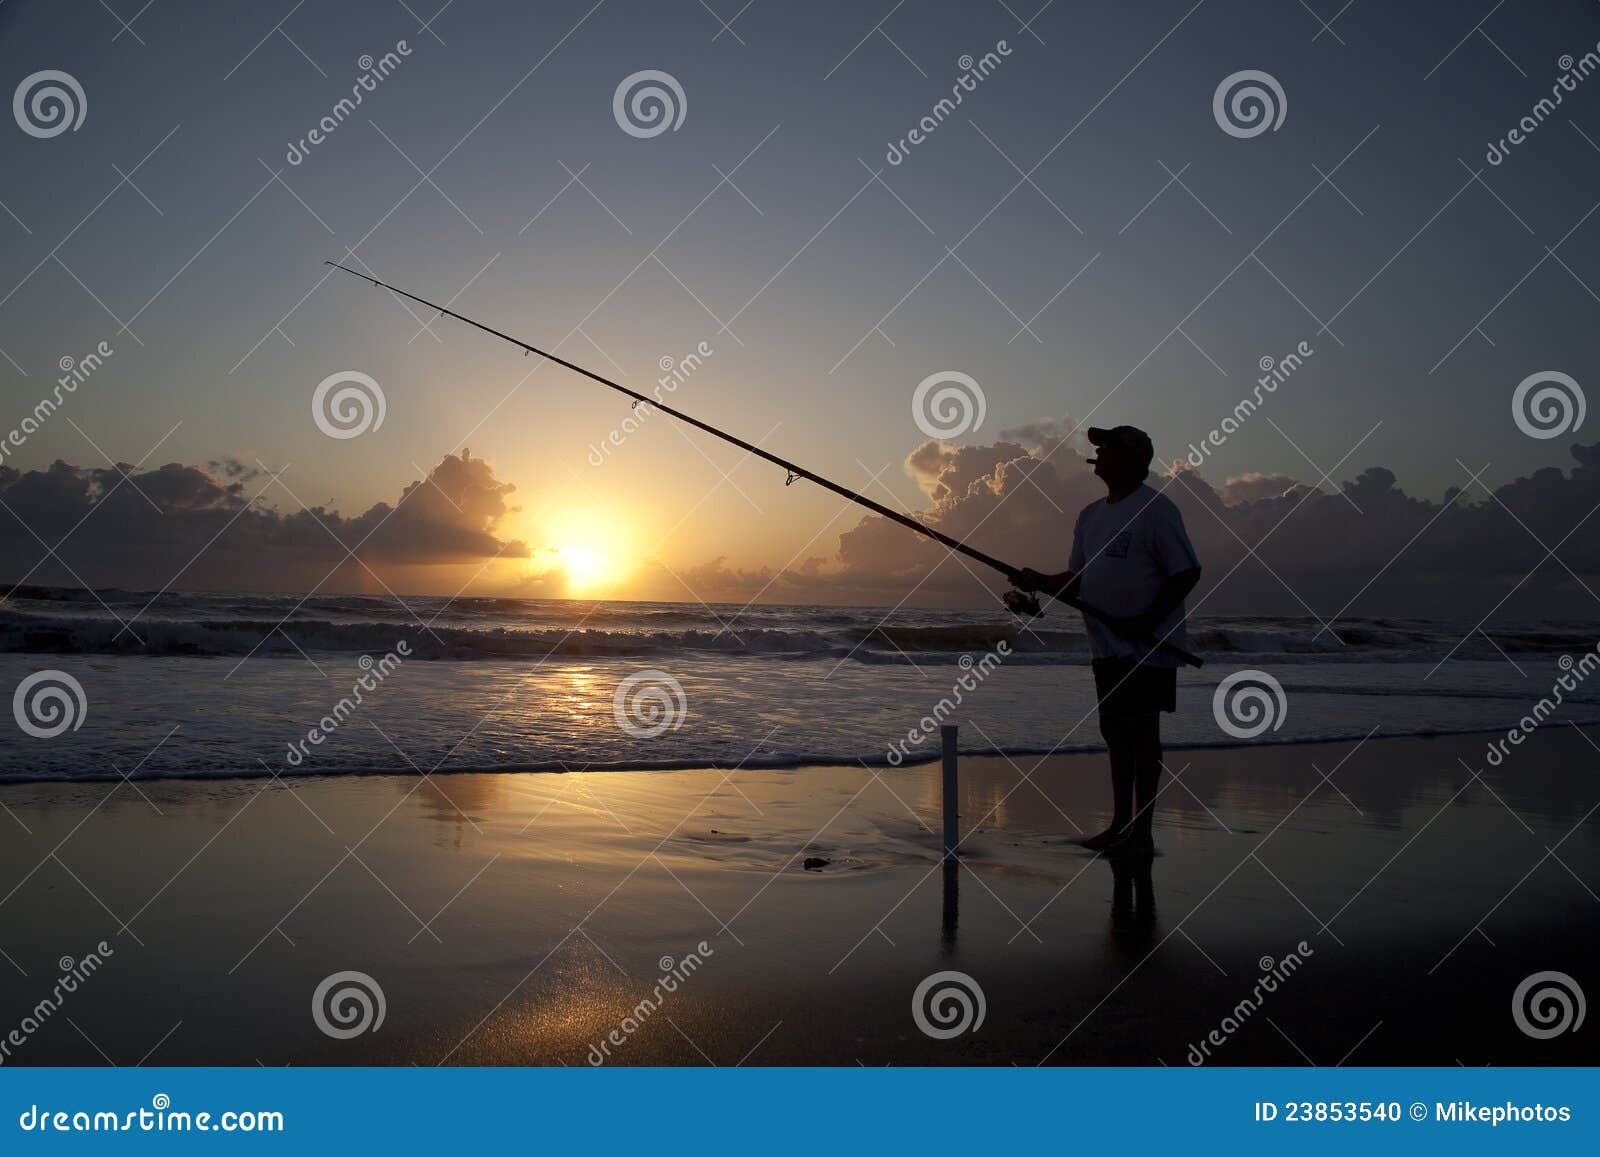 surf fishing